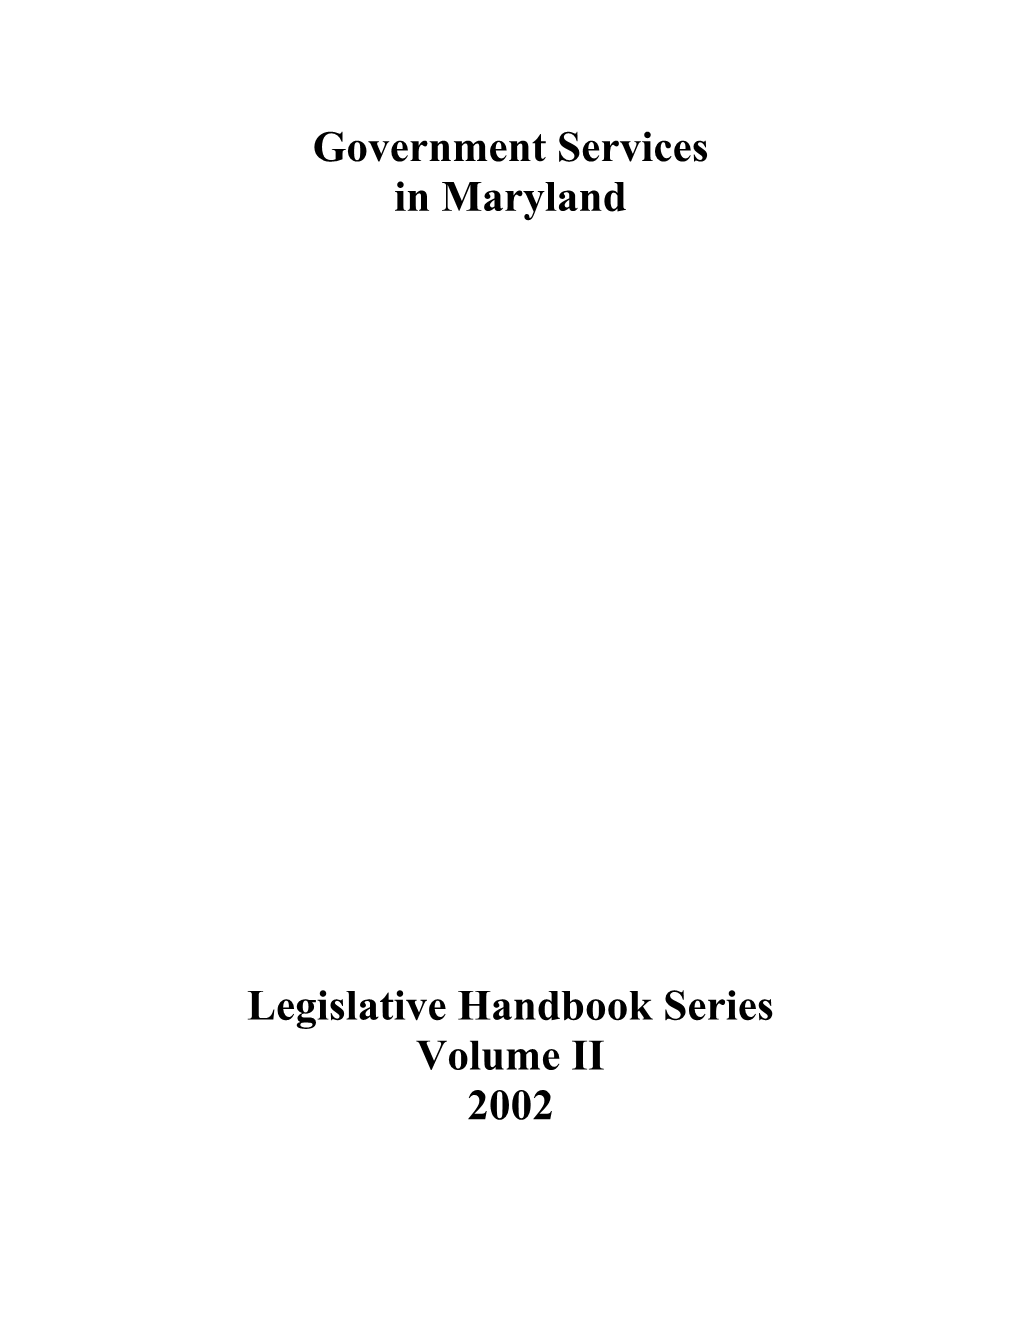 2002 Legislative Handbook Series